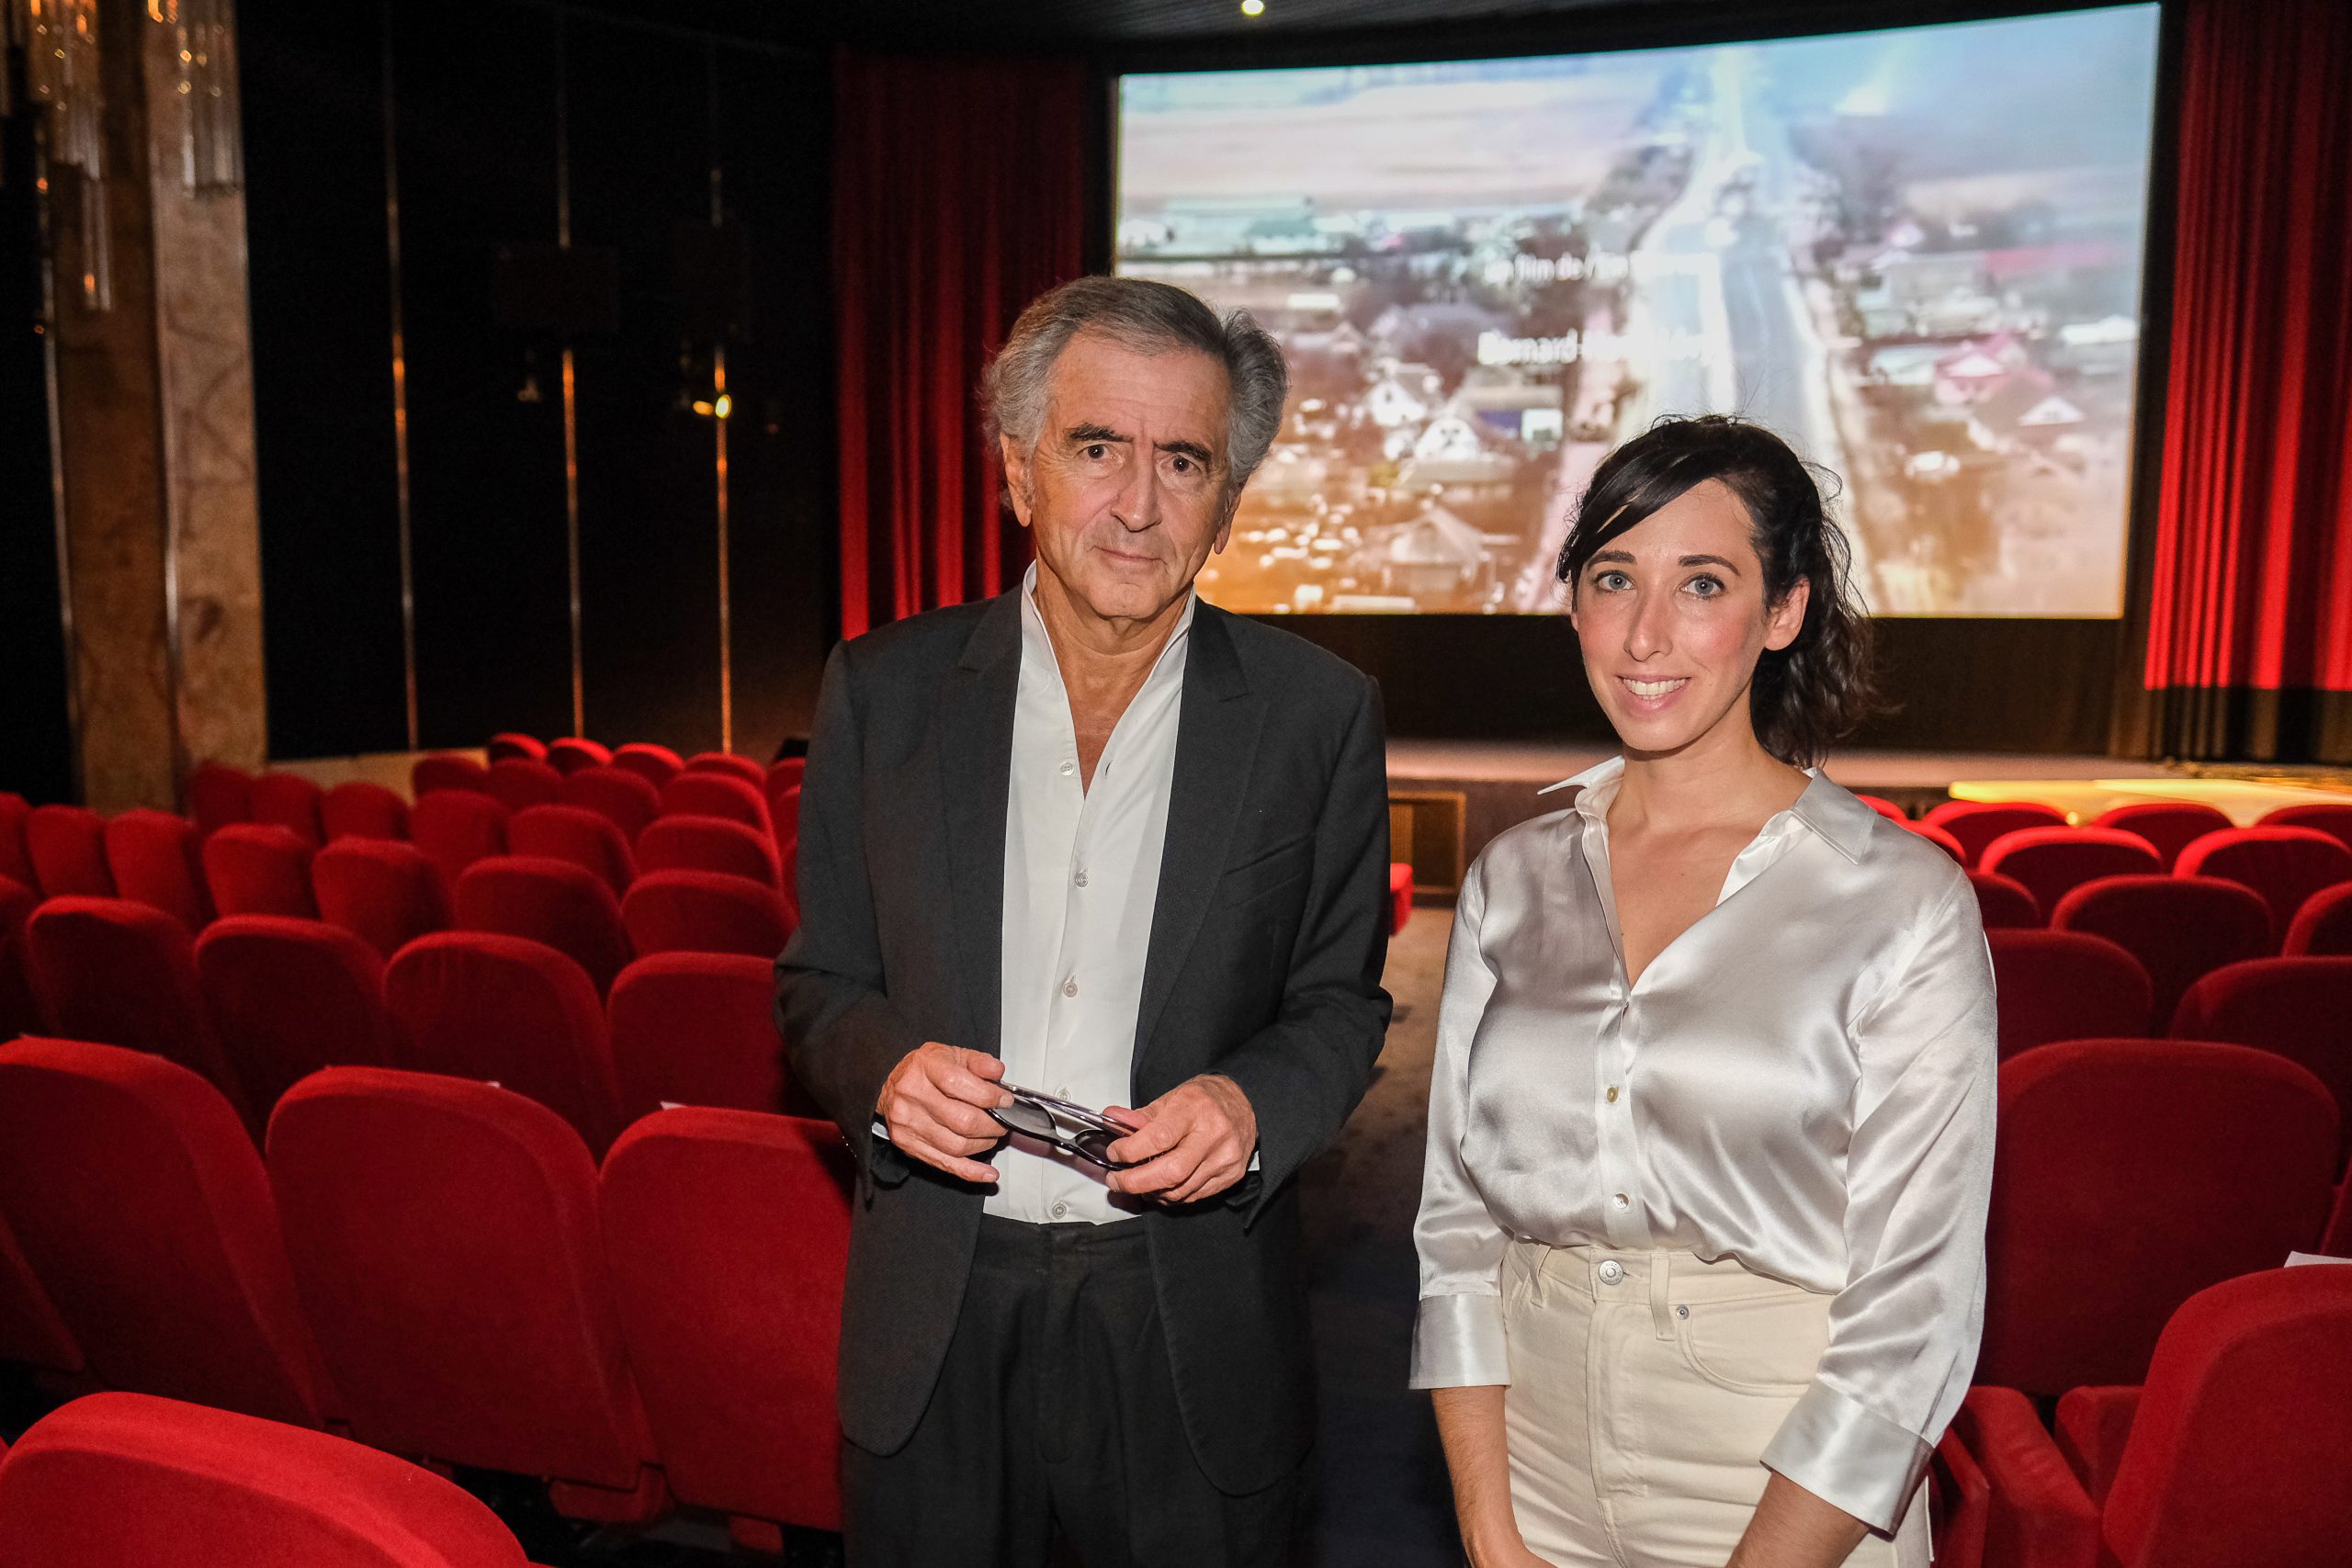 Bernard-Henri Lévy and Emily Hamilton, producer of the film "Why Ukraine", at the Cinema Le Balzac in Paris.